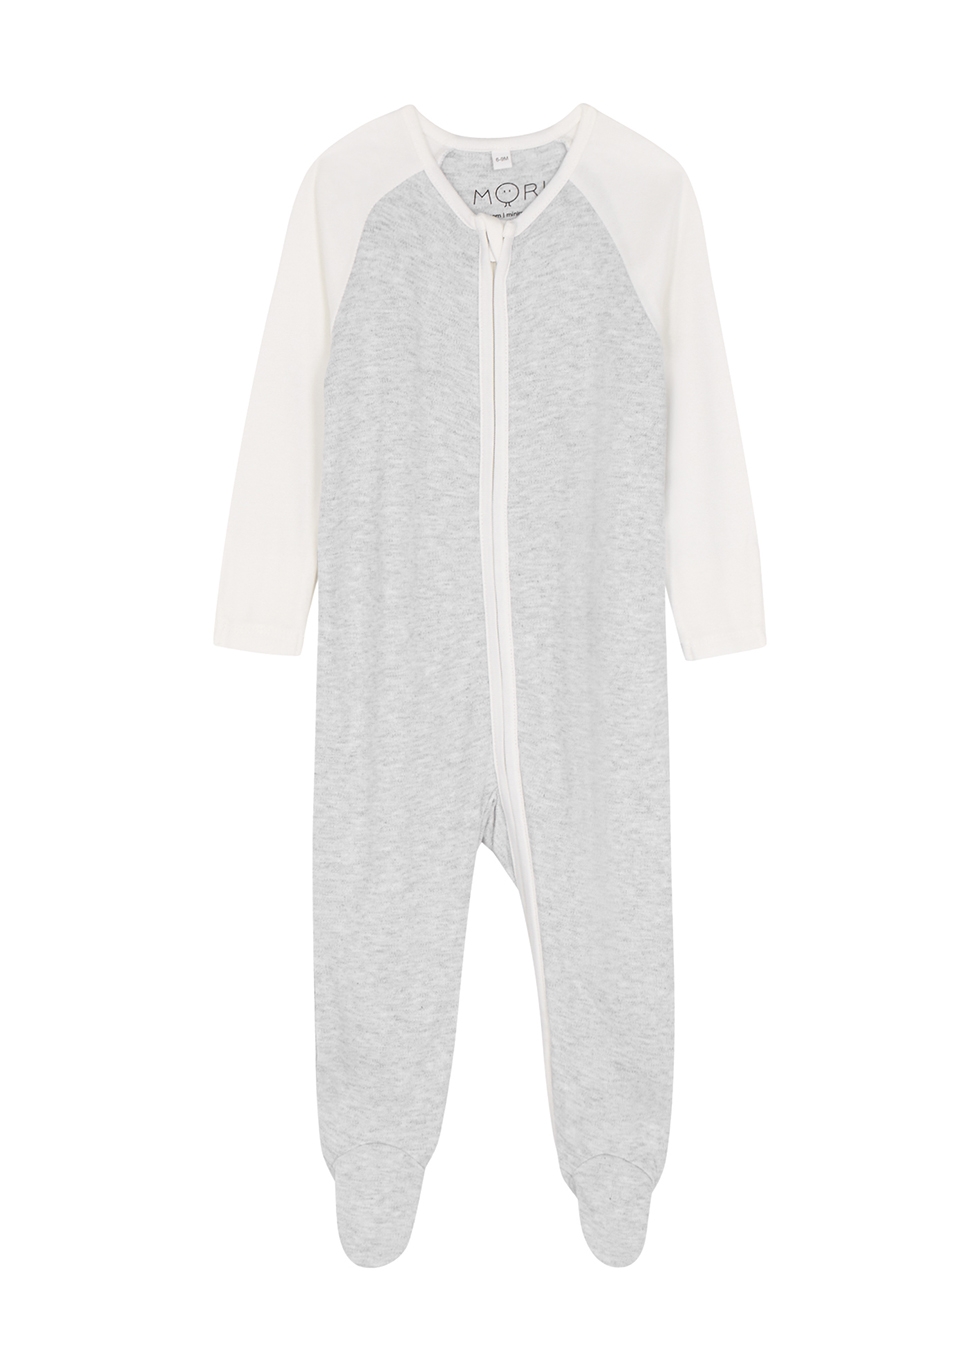 Harvey Nichols Baby Clothing Loungewear Sleepsuits Grey mélange jersey sleepsuit 